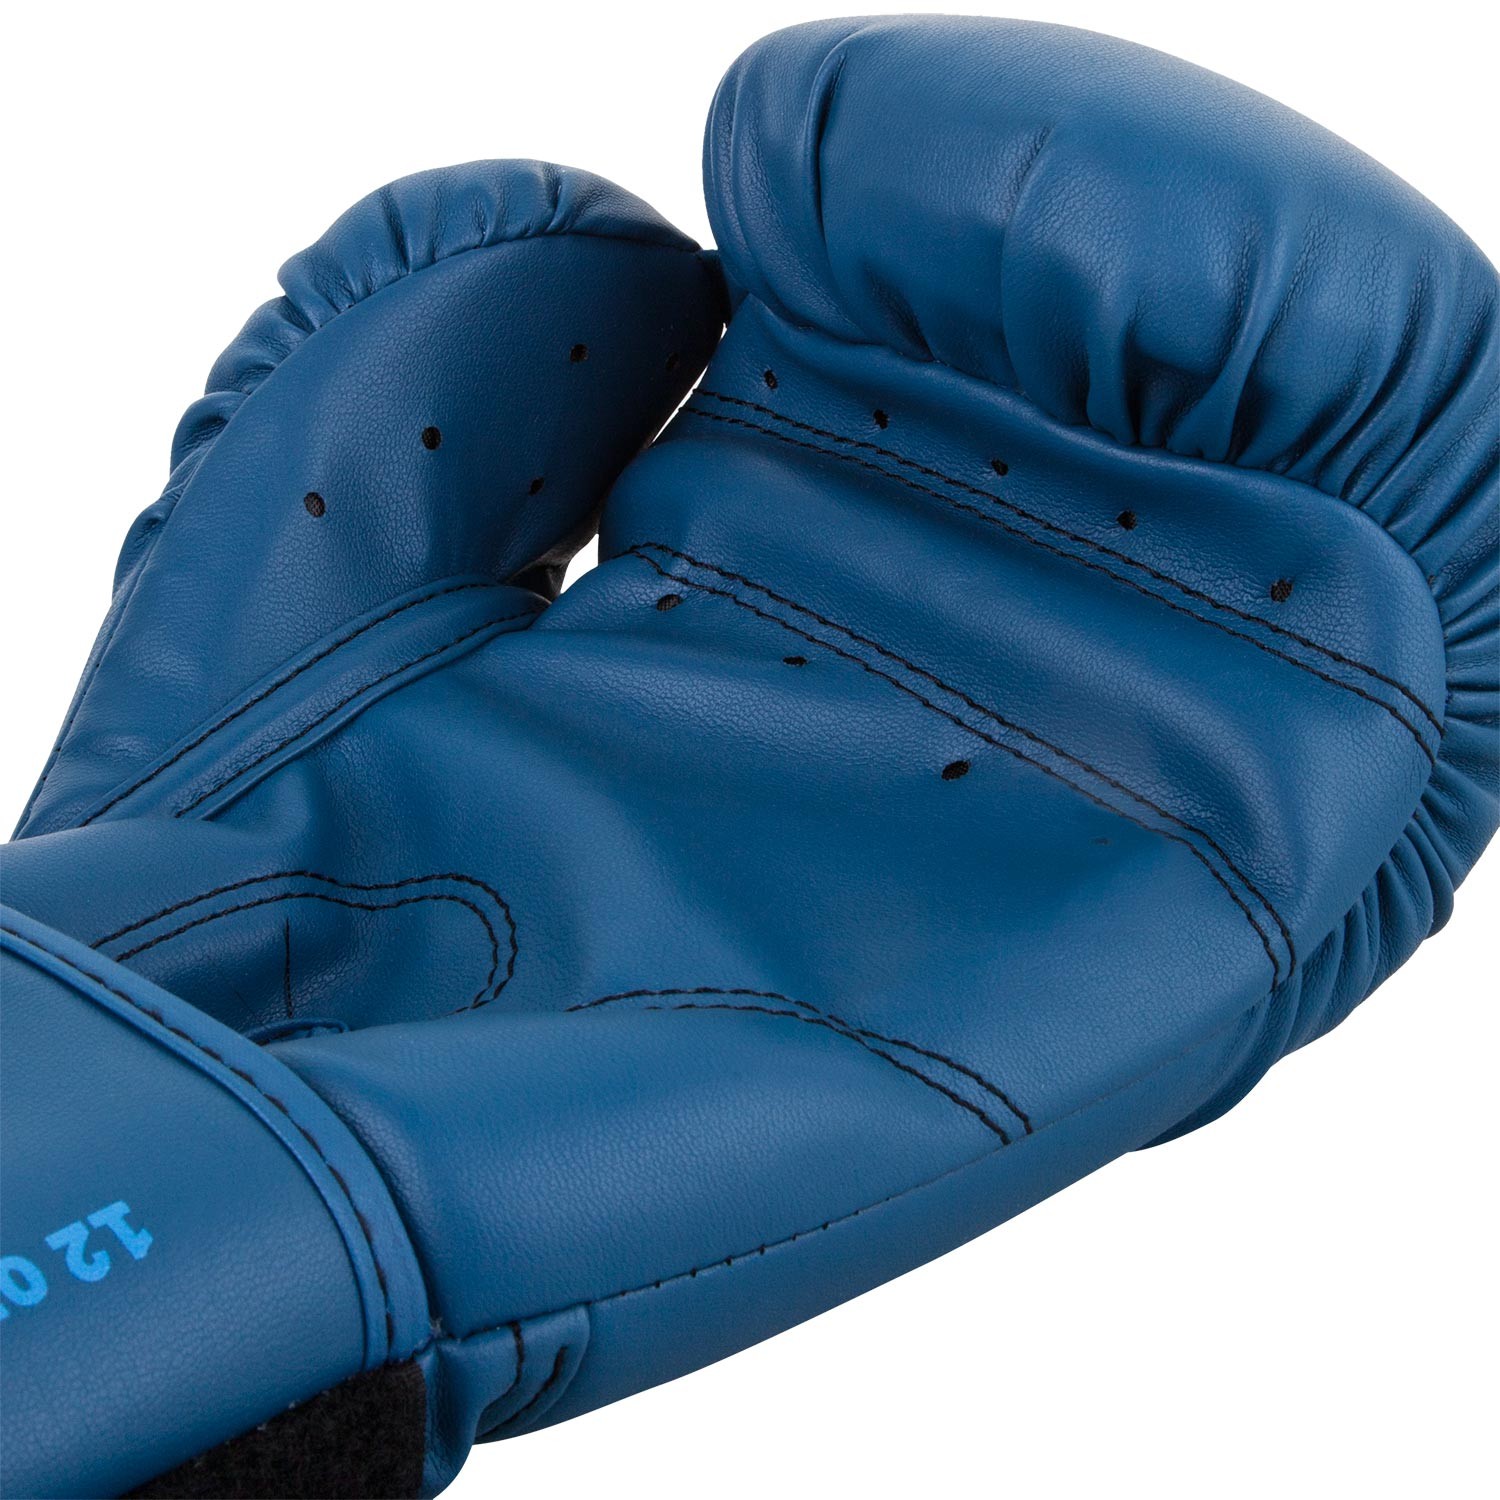 Перчатки боксерские Venum Contender Navy/Navy